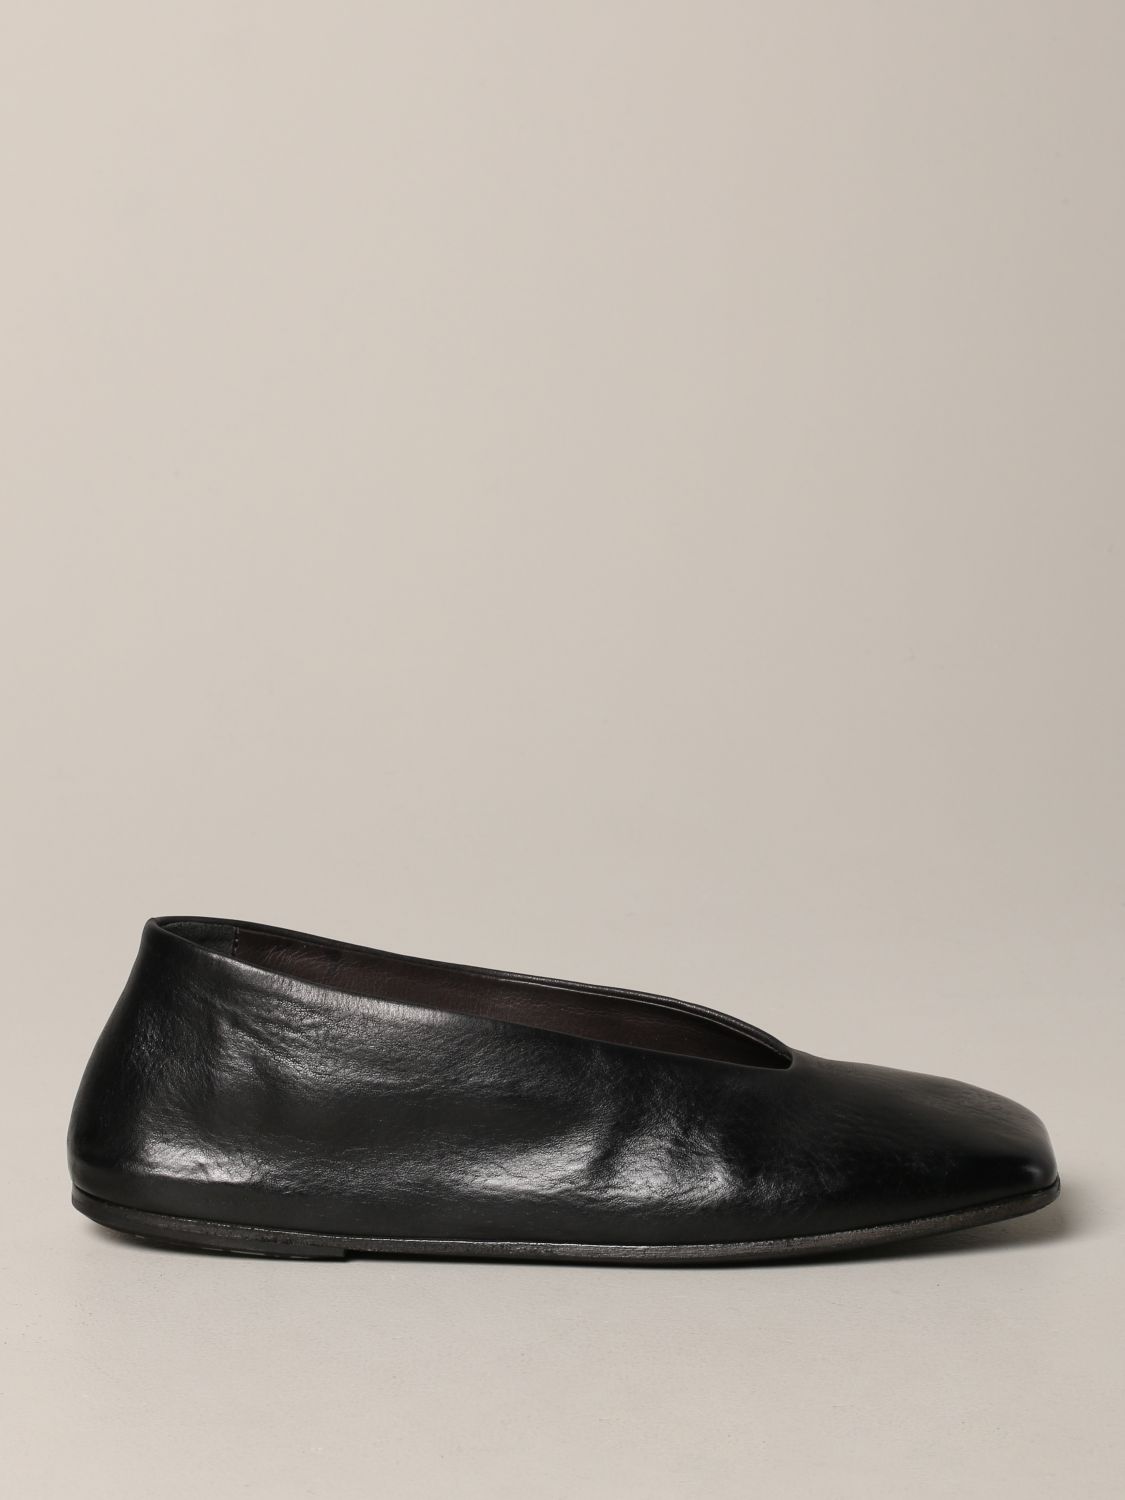 芭蕾平底鞋 Marsèll: Marsell spatolona 芭蕾舞鞋 黑色 1